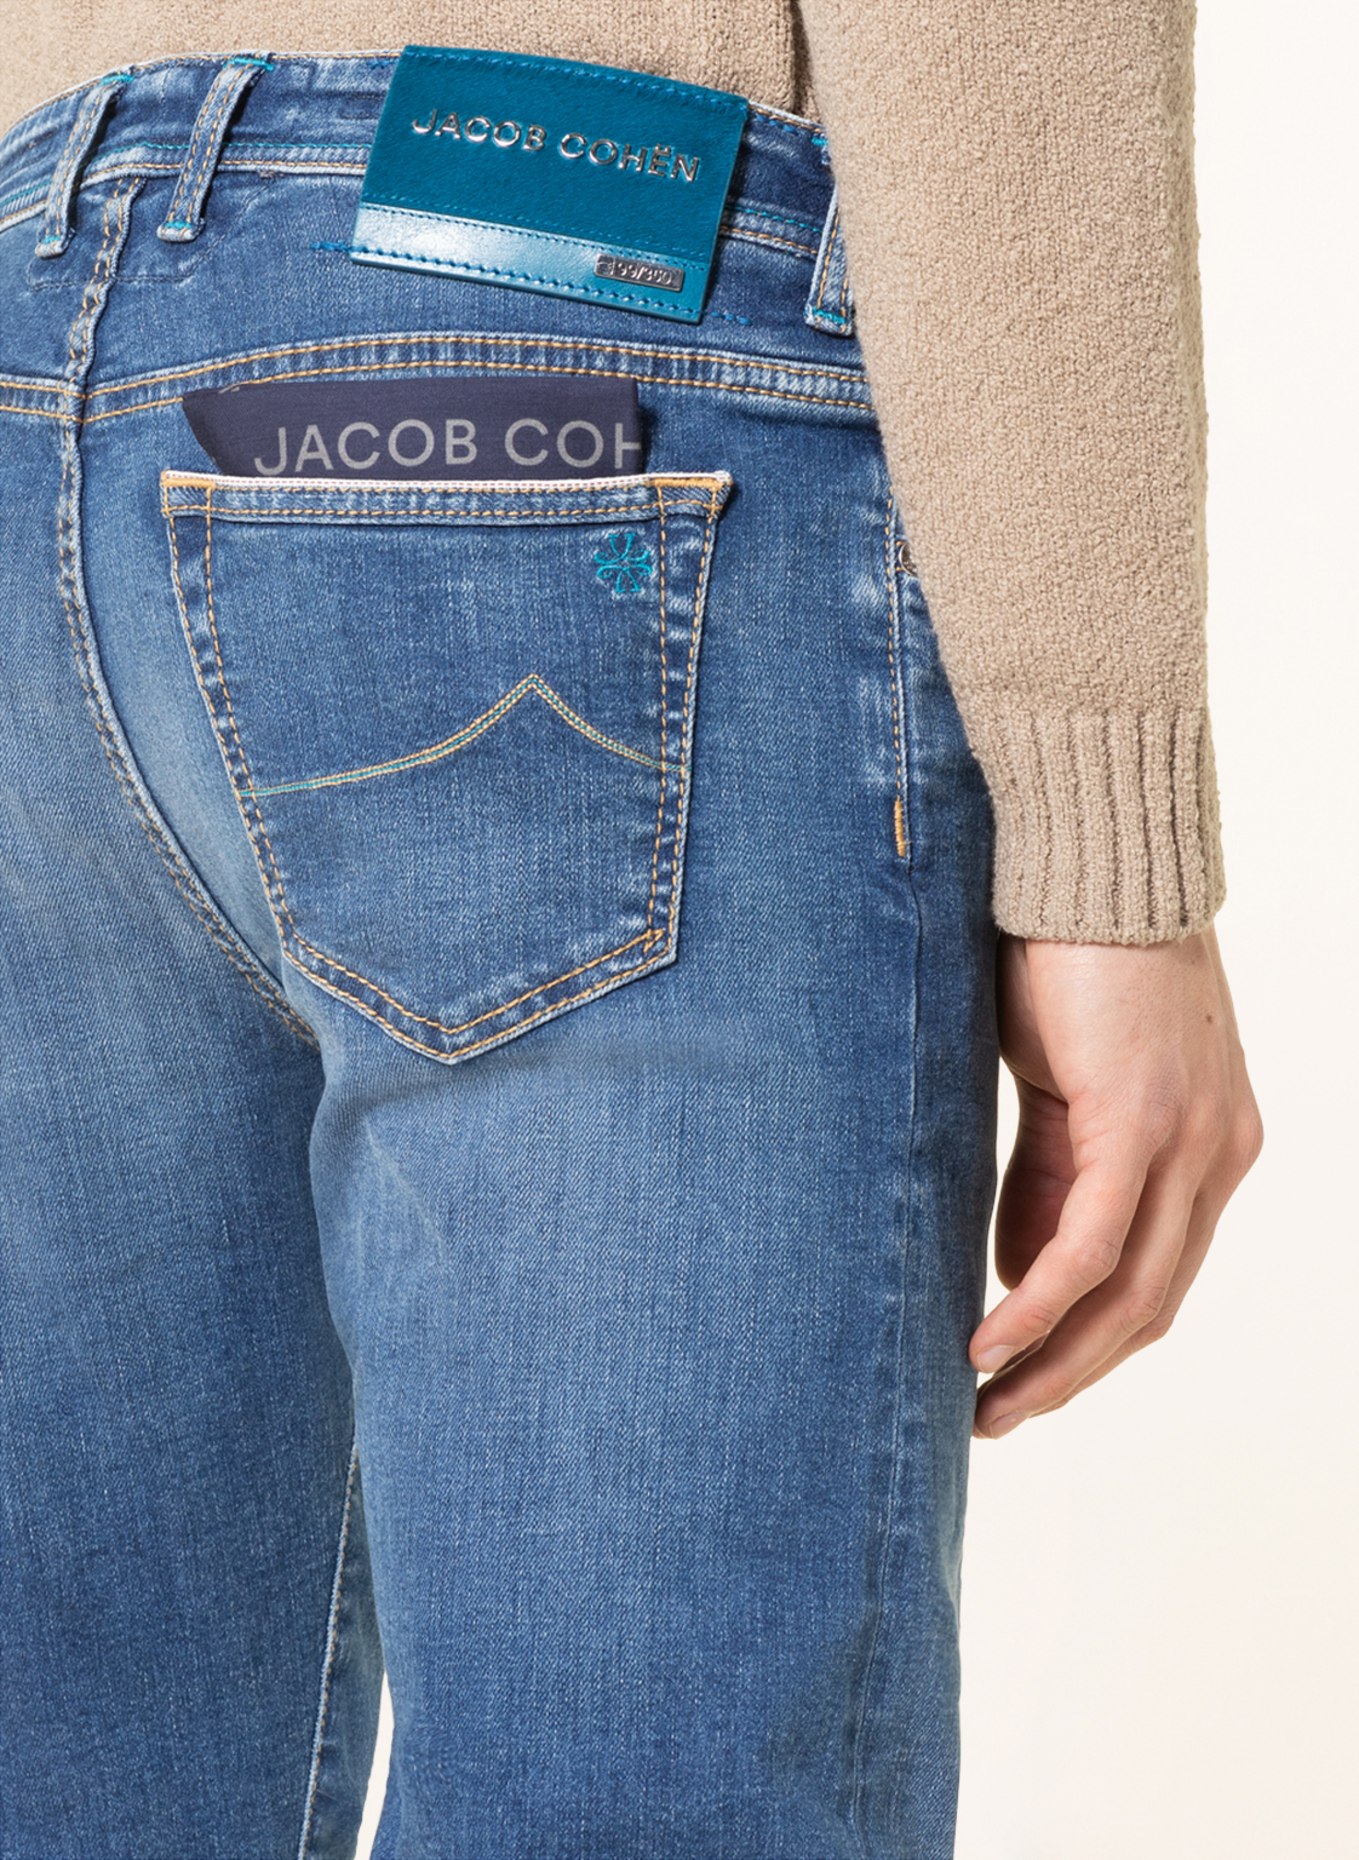 JACOB COHEN Jeans BARD LIMITED Regular Fit, Farbe: 418D Light Blue USed (Bild 6)